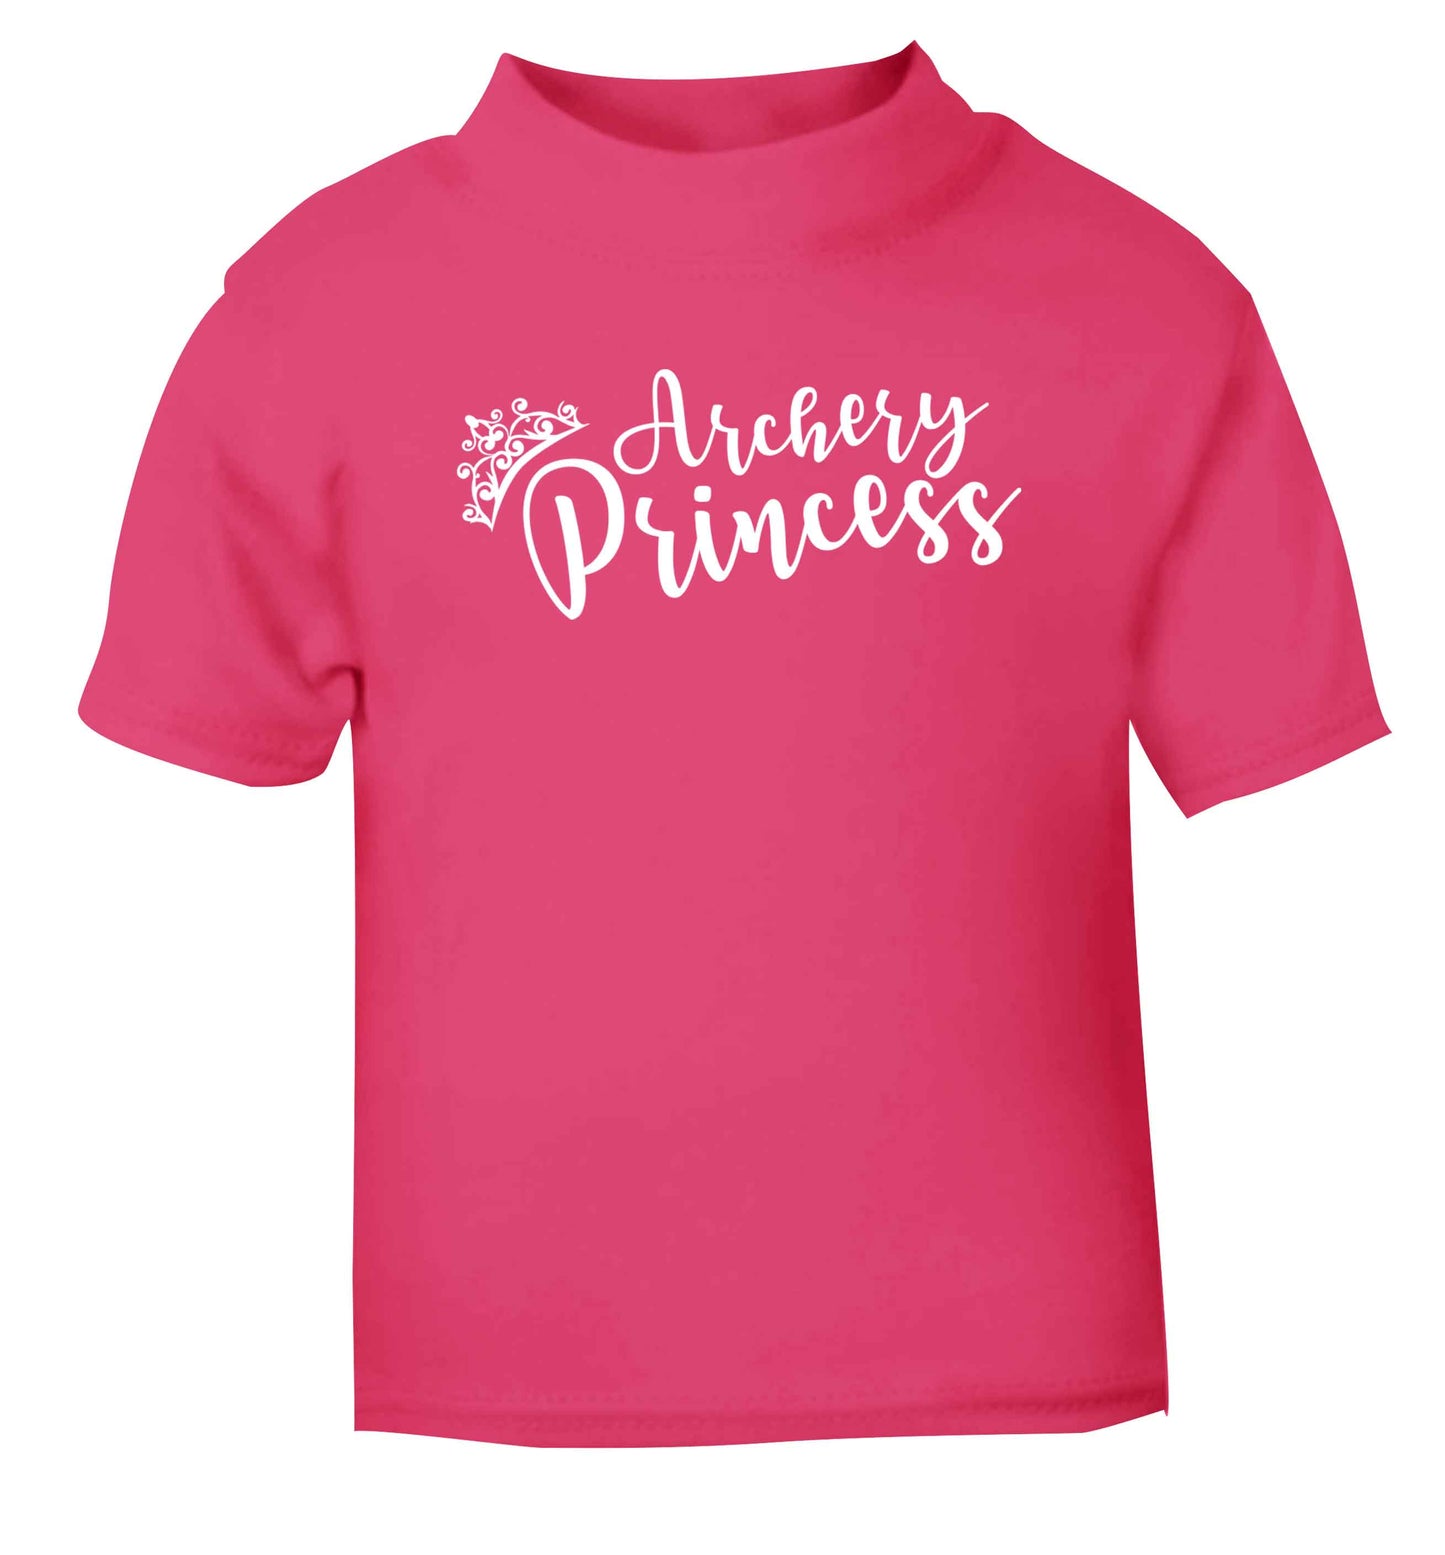 Archery princess pink Baby Toddler Tshirt 2 Years